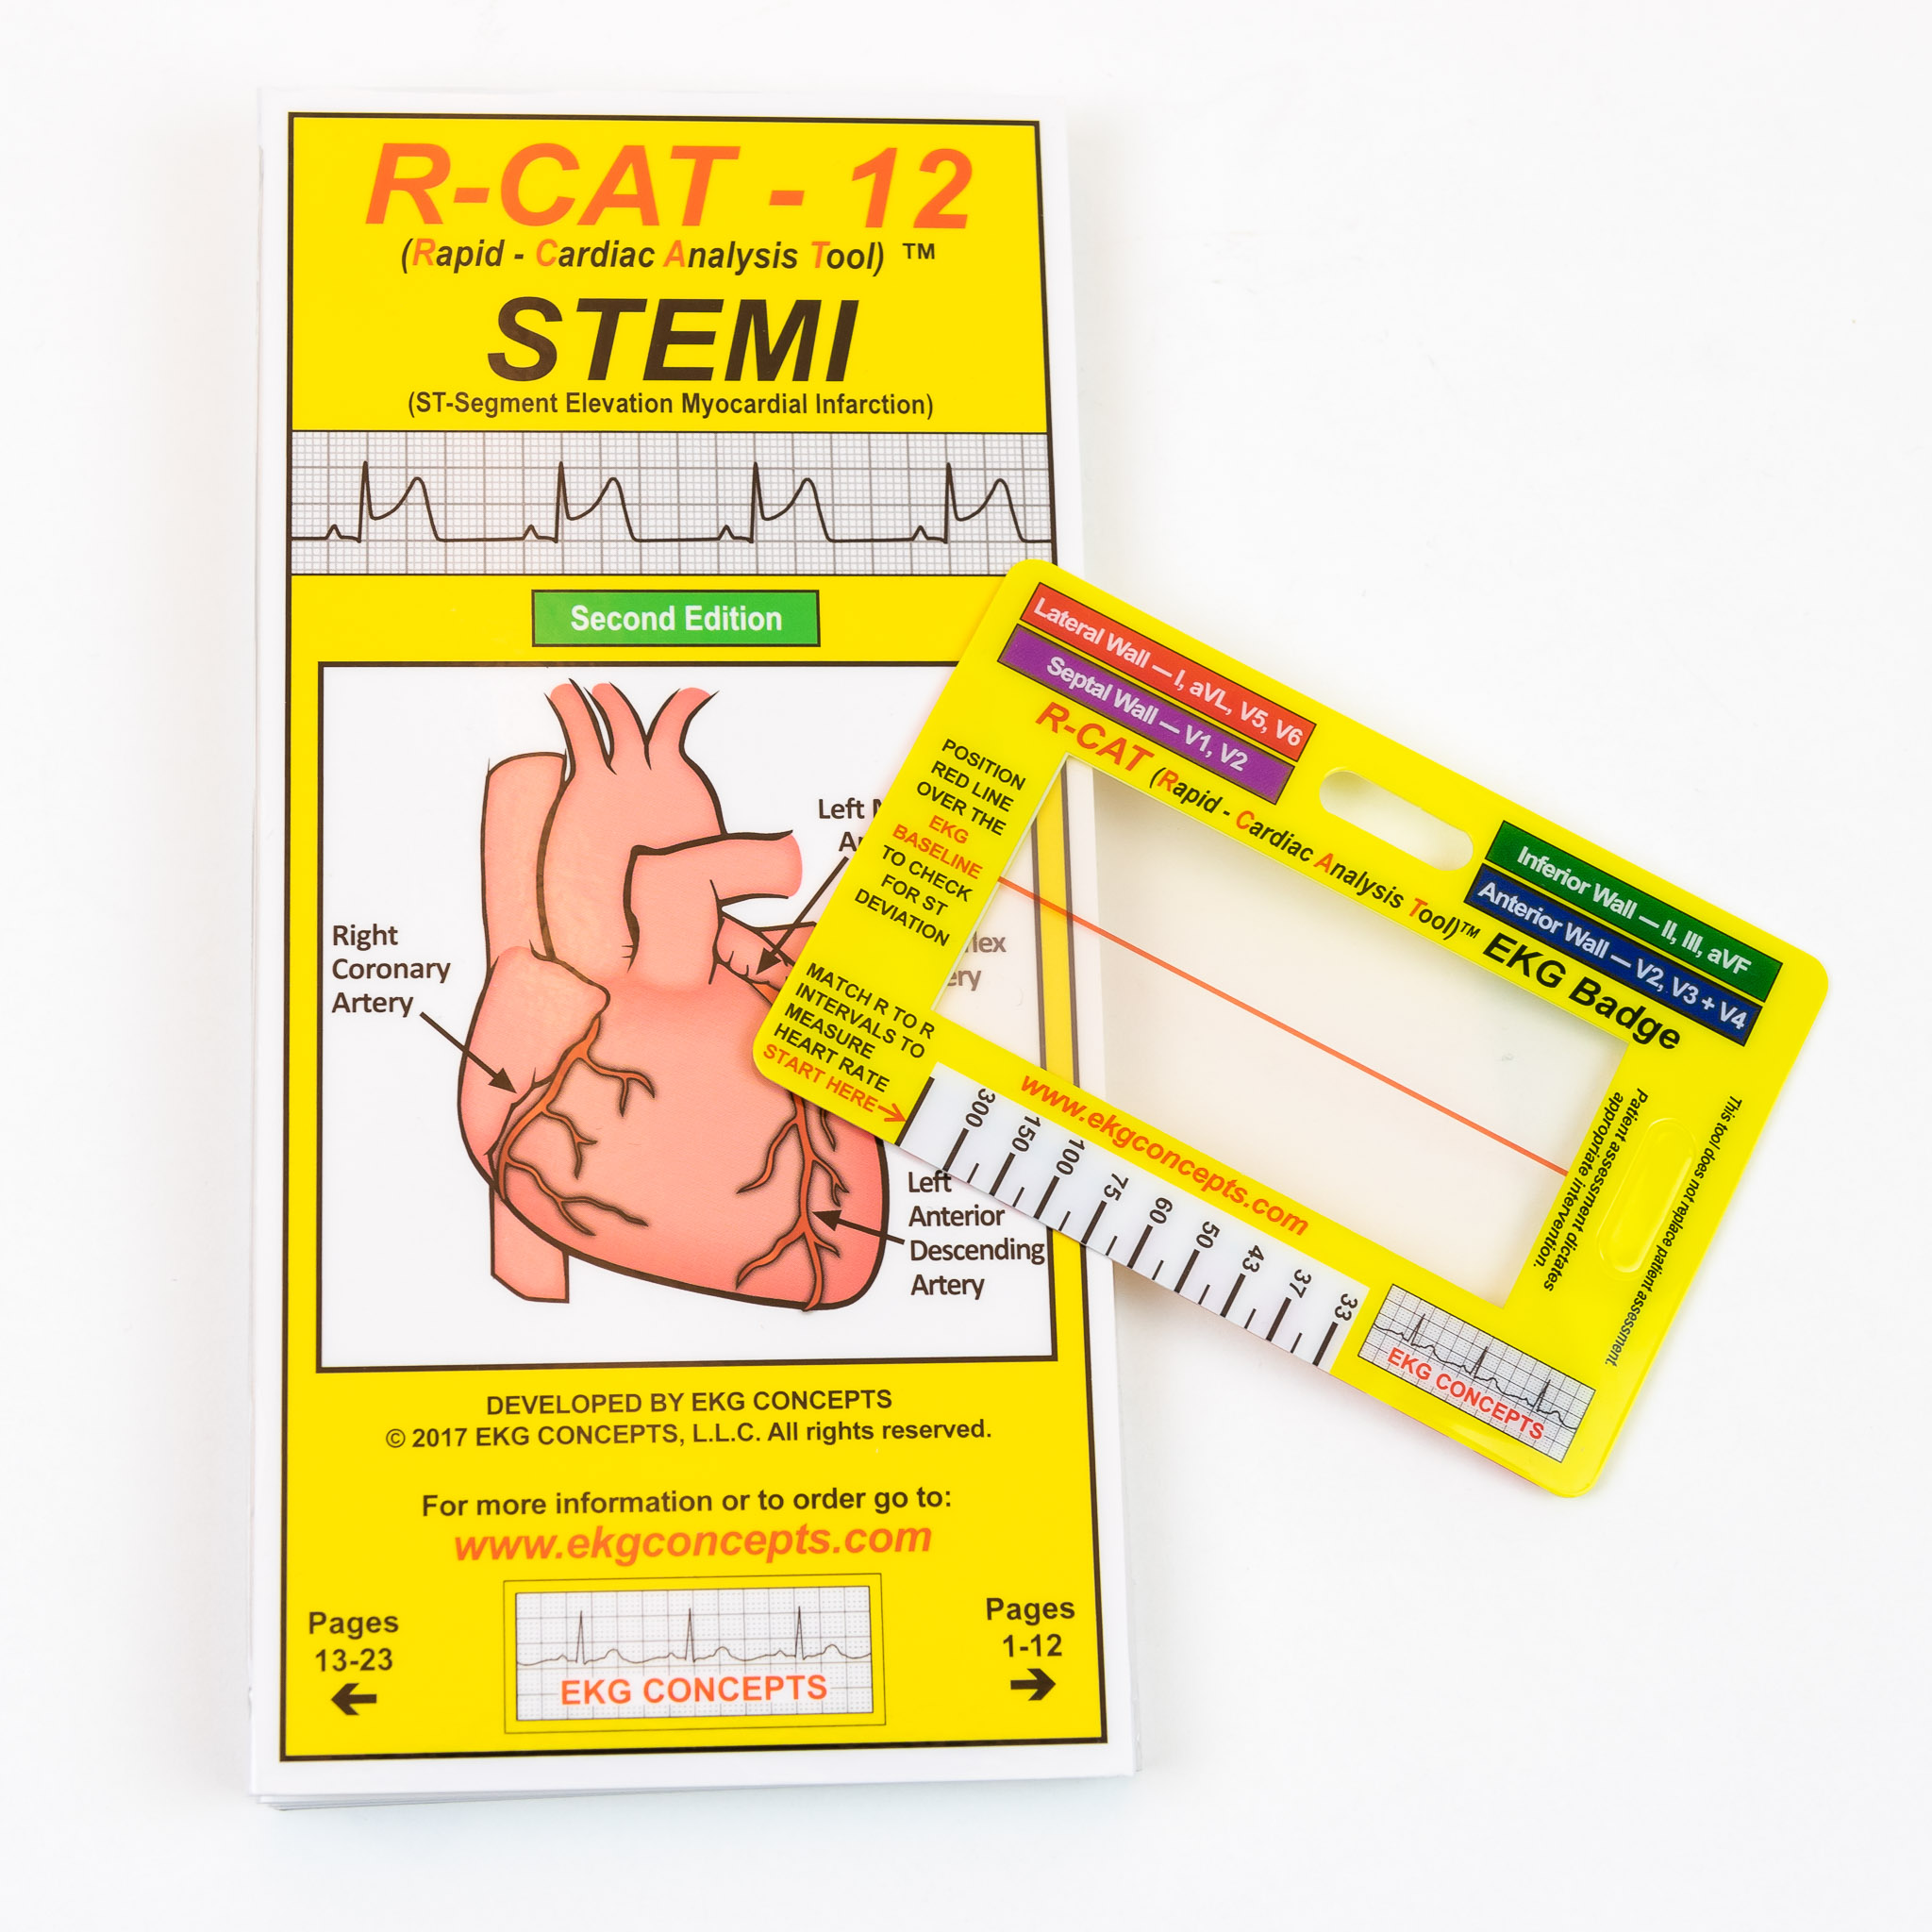 R-CAT 12 for STEMI includes EKG Badge